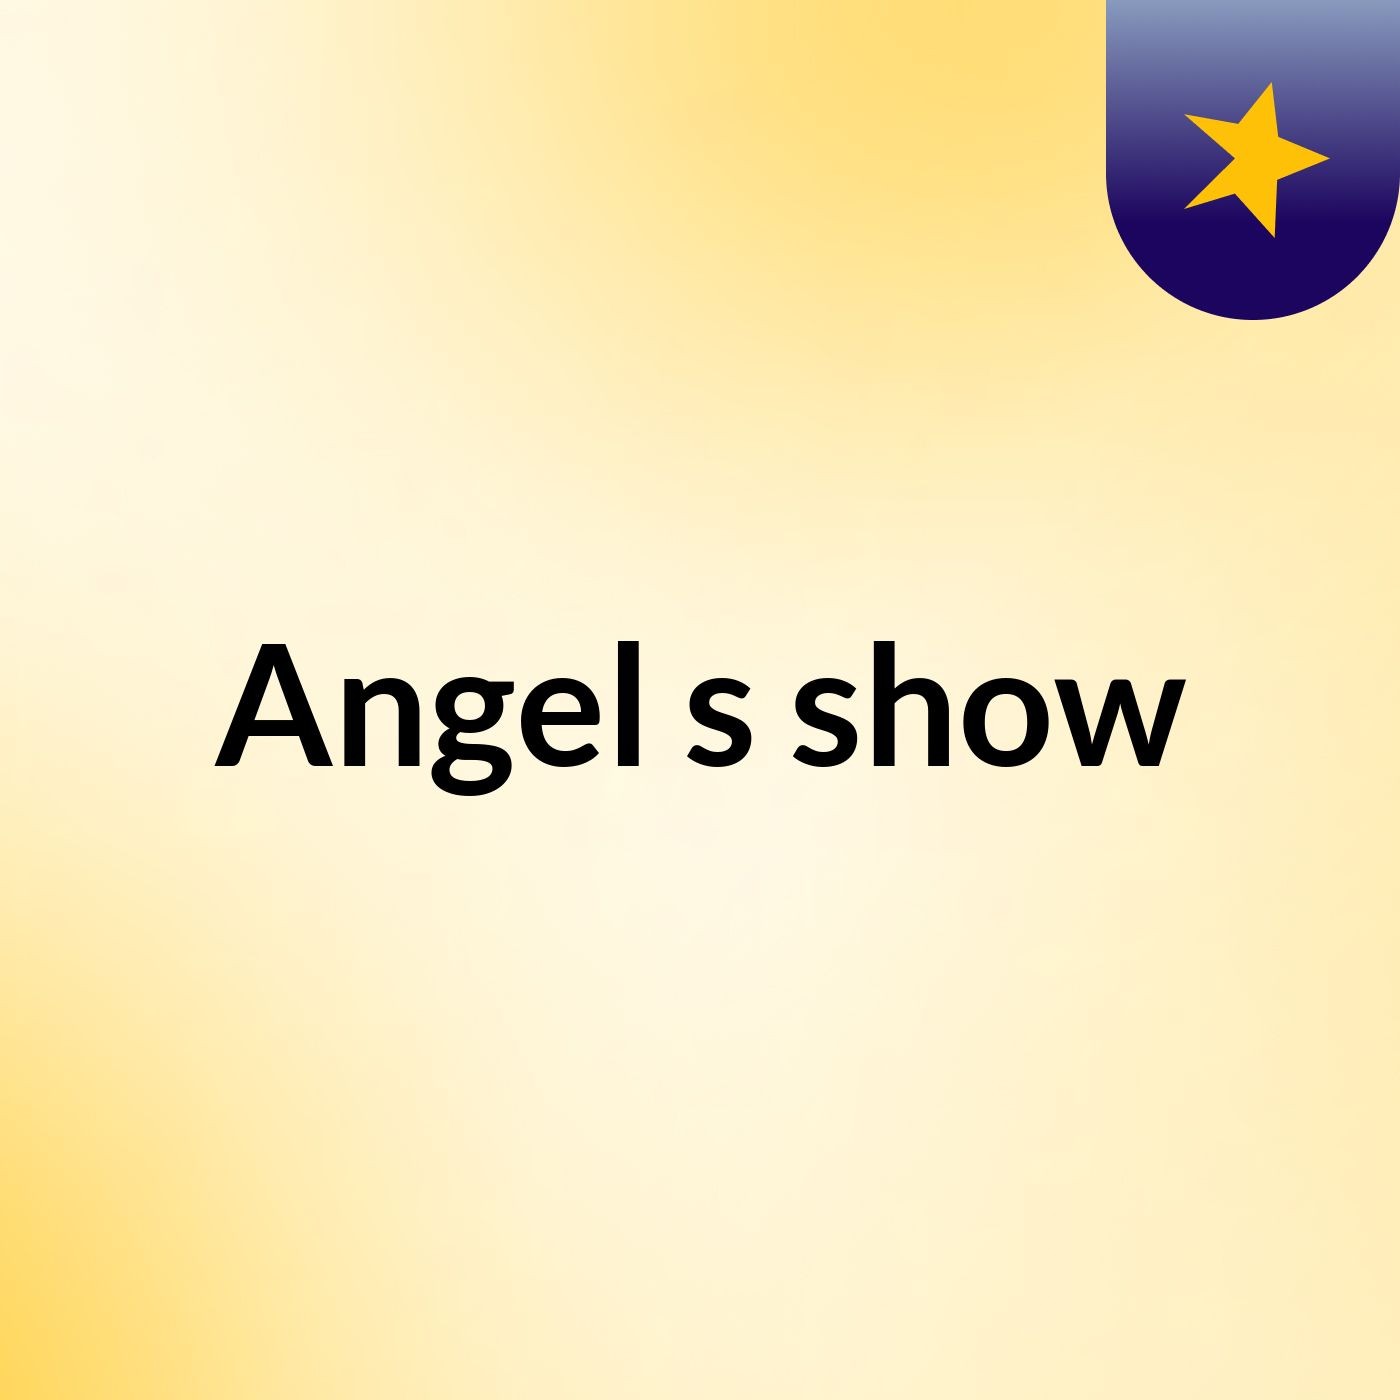 Episode 6 - Angel's show